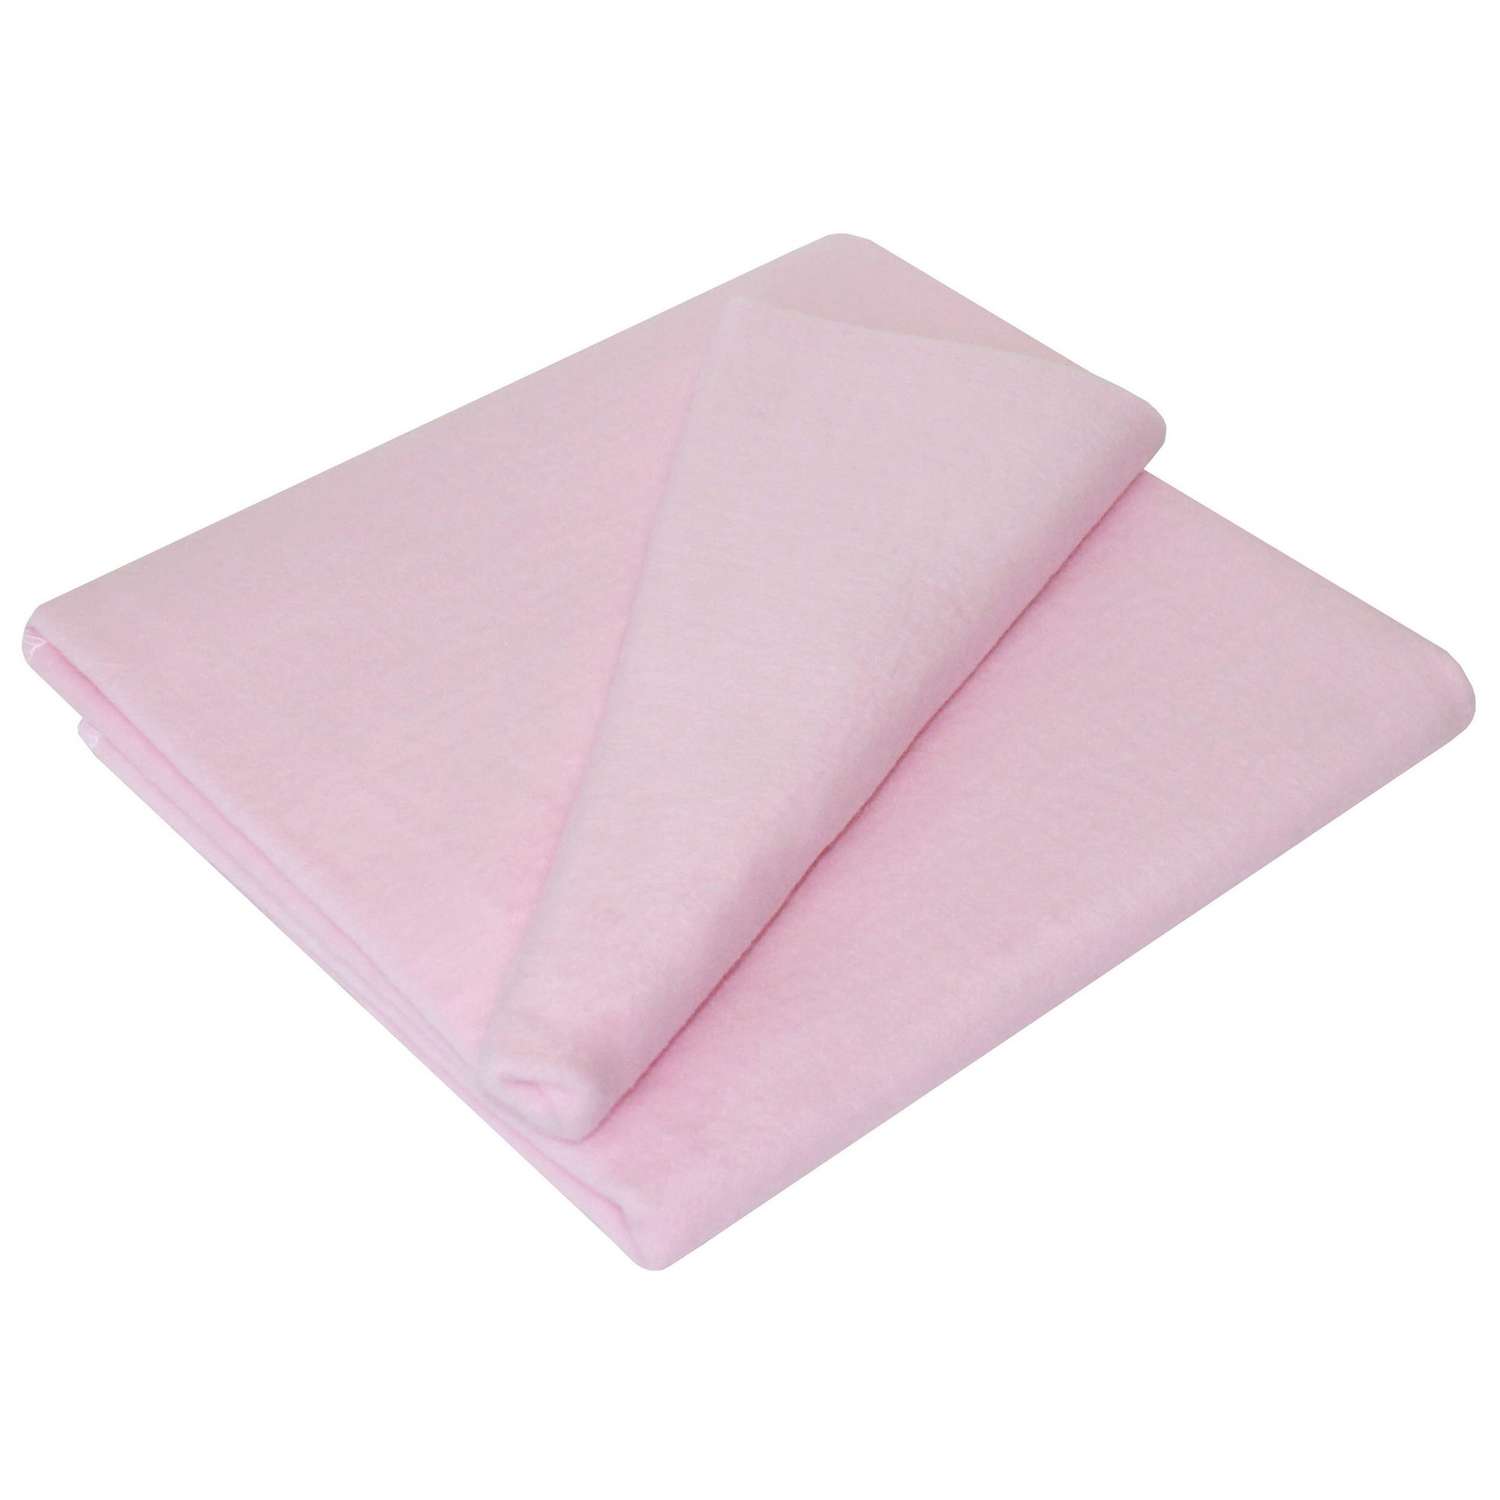 Одеяло байковое Ермошка Фламинго 57-8 ЕТЖ Премиум - фото 3